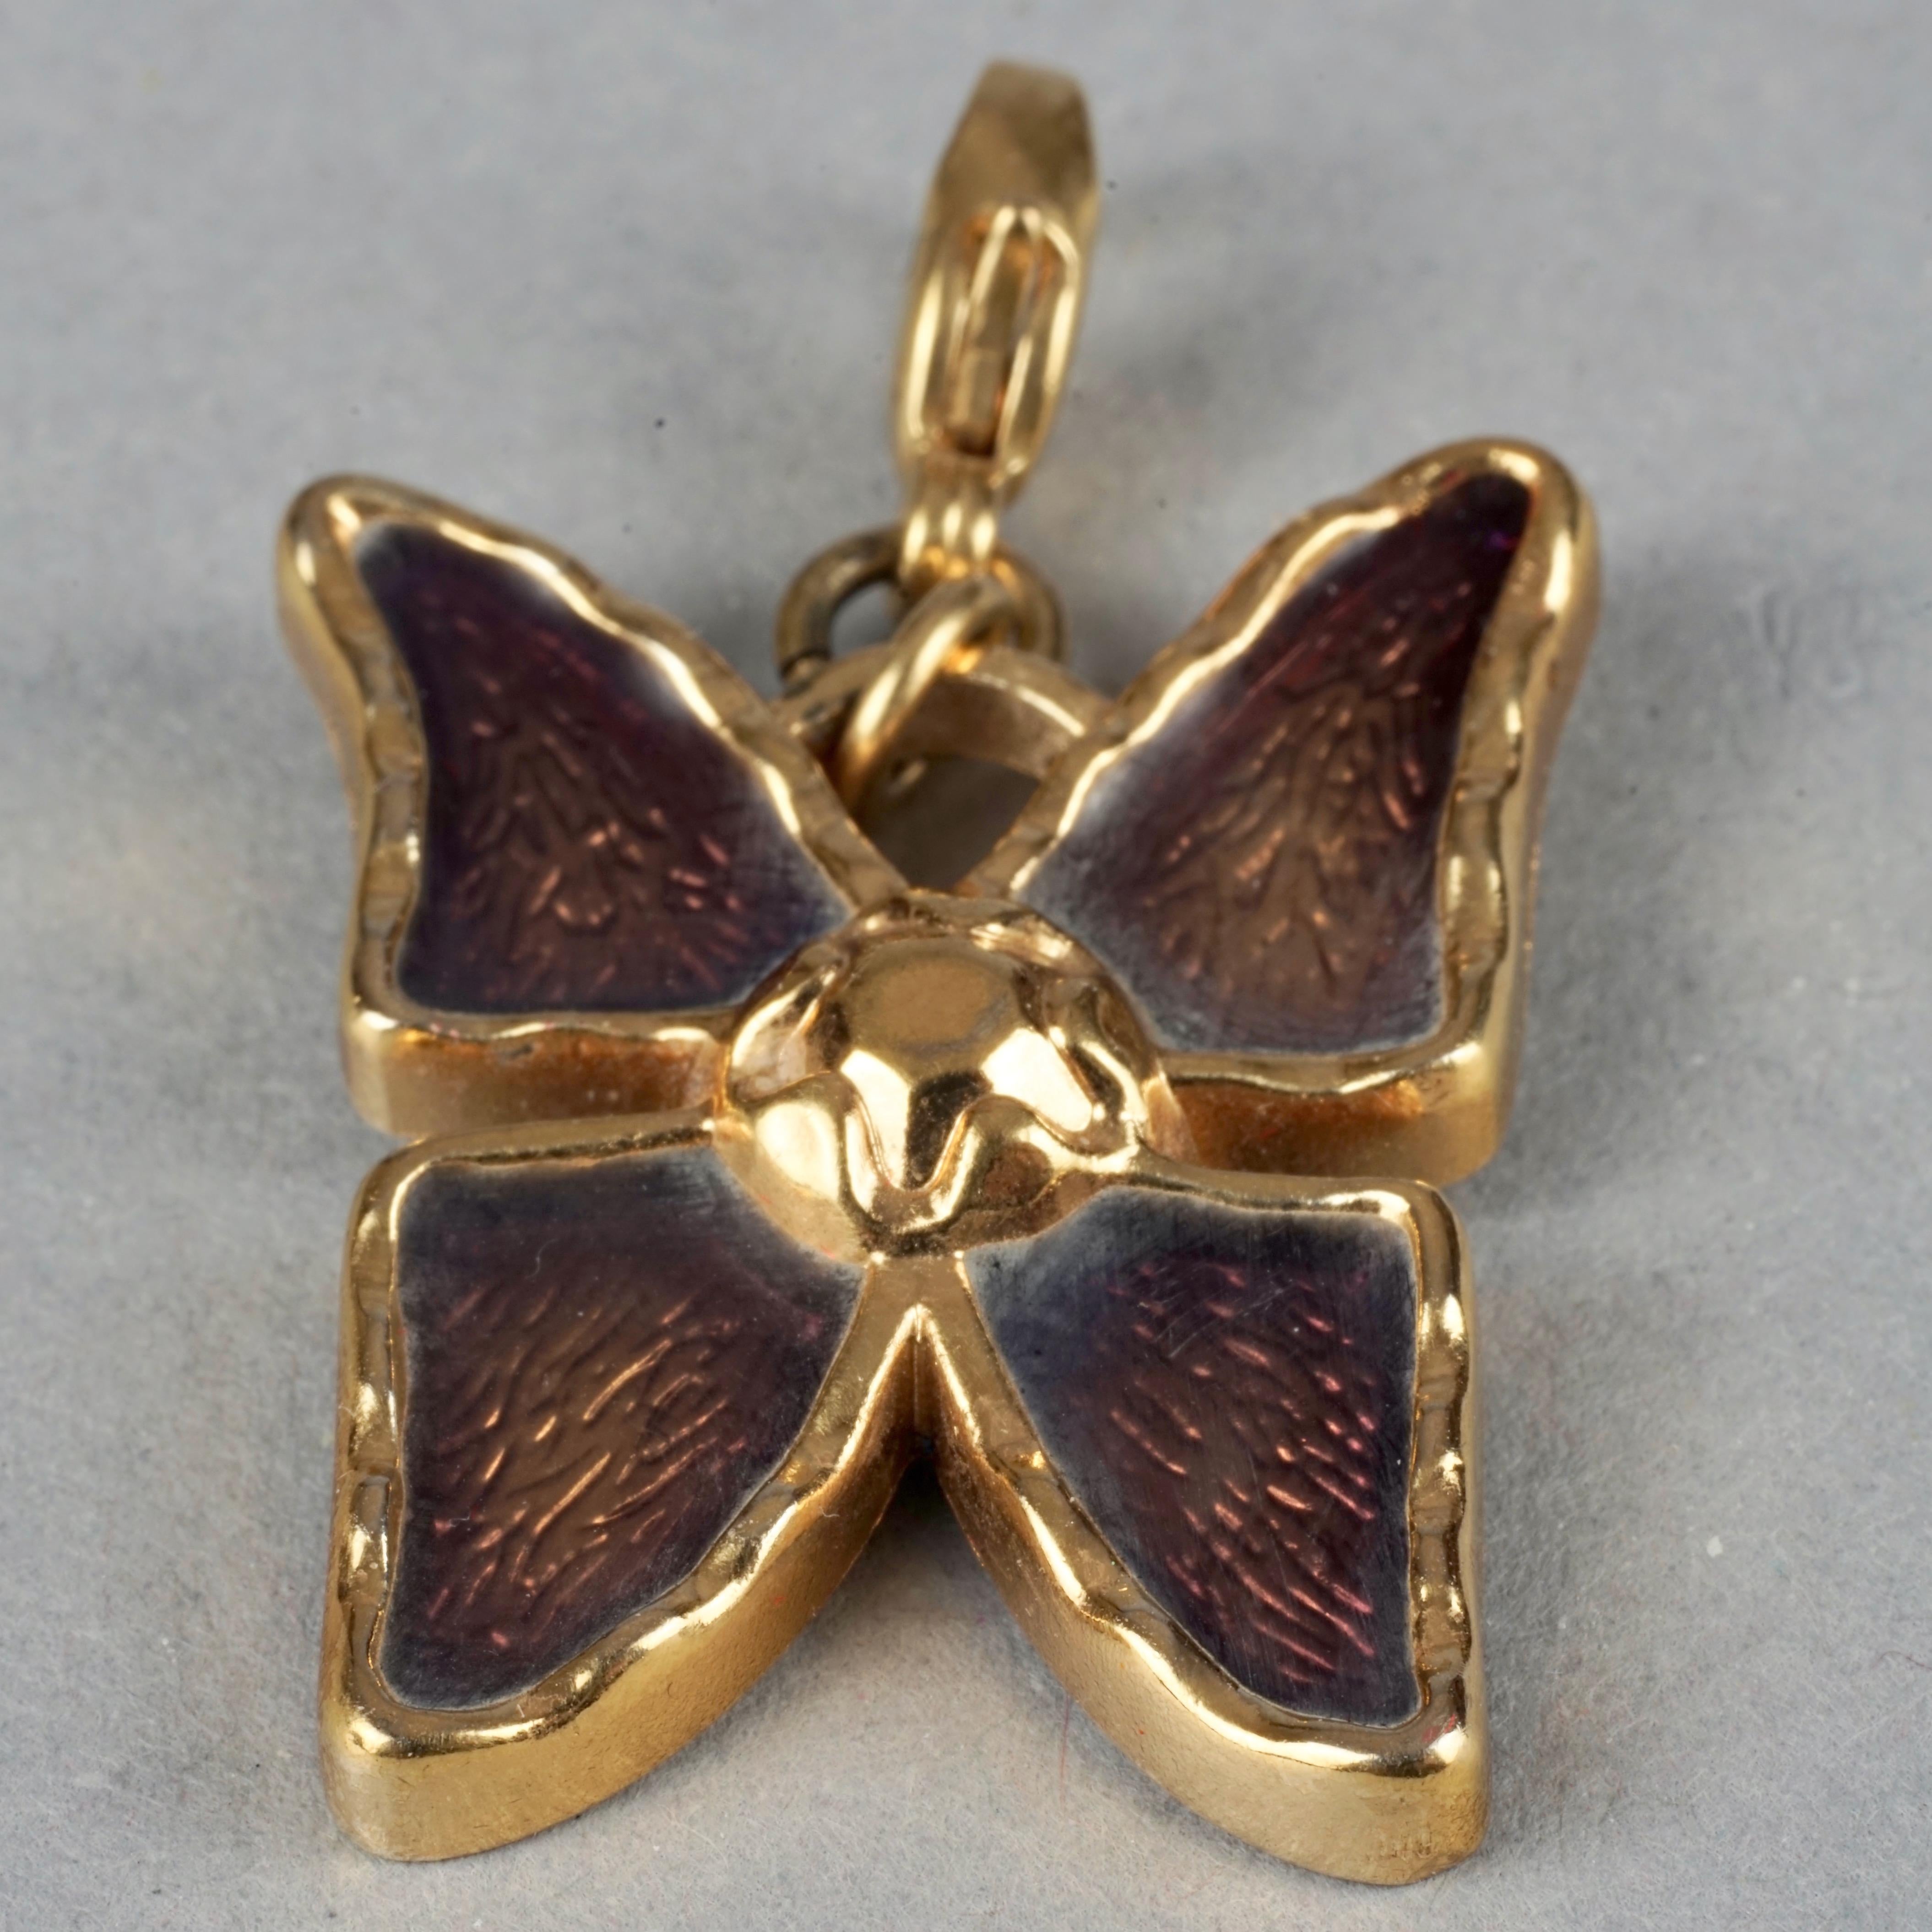 Vintage YVES SAINT LAURENT Ysl Butterfly Enamel Charm Pendant Necklace In Excellent Condition For Sale In Kingersheim, Alsace